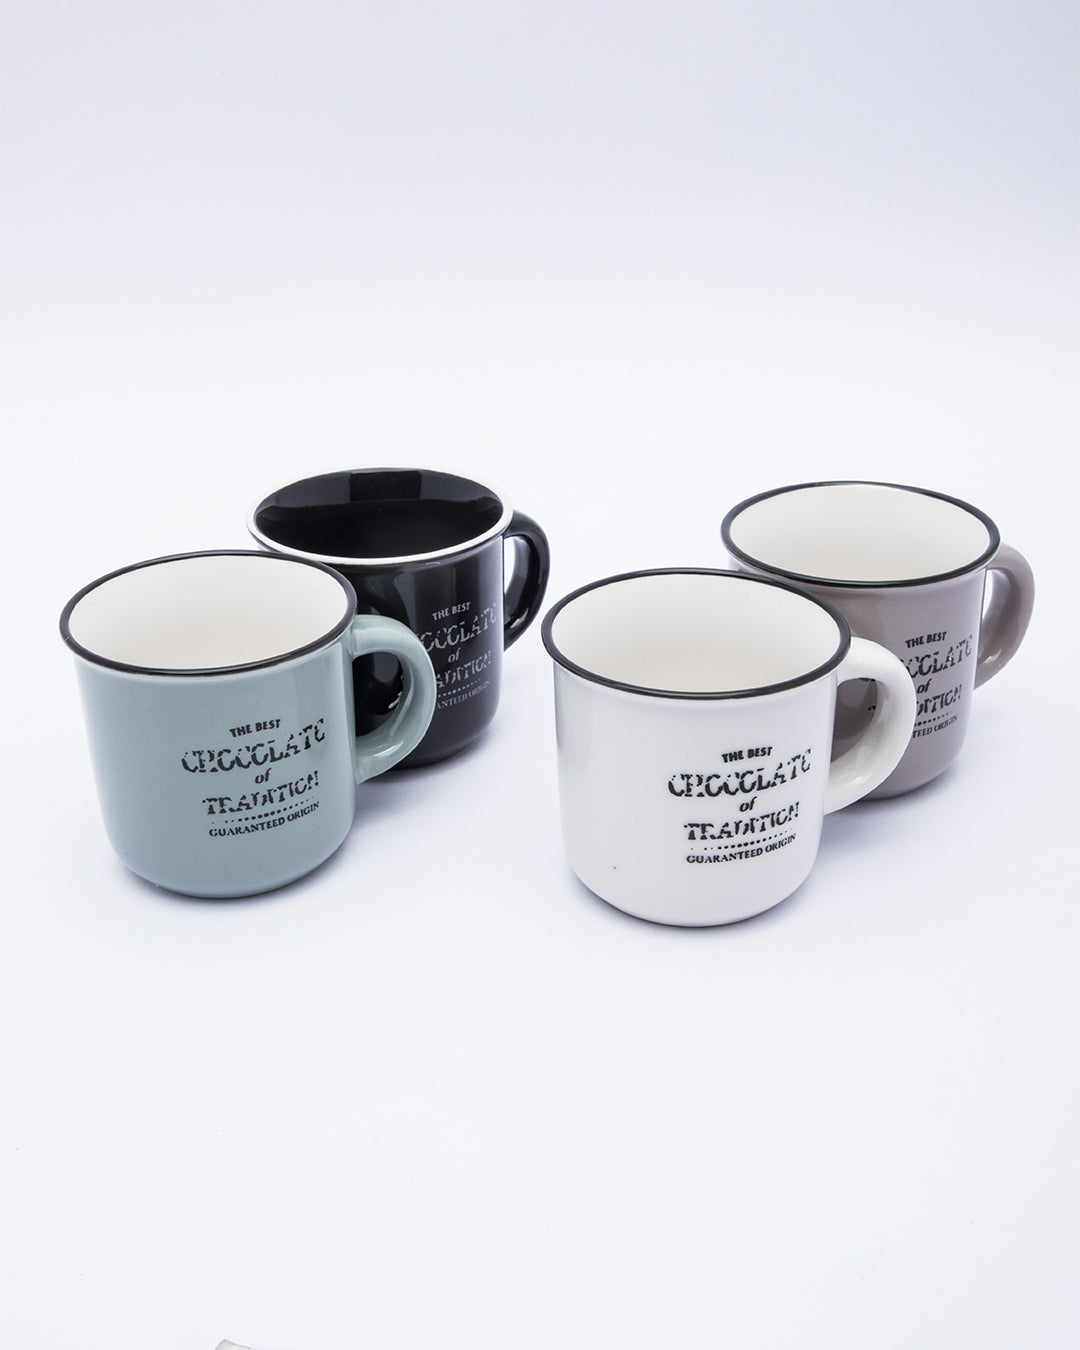 VON CASA Espresso Mugs, Tea & Coffee Mugs, Dishwasher & Microwave Safe, Assorted Colours, Ceramic, Set of 4, 140 mL